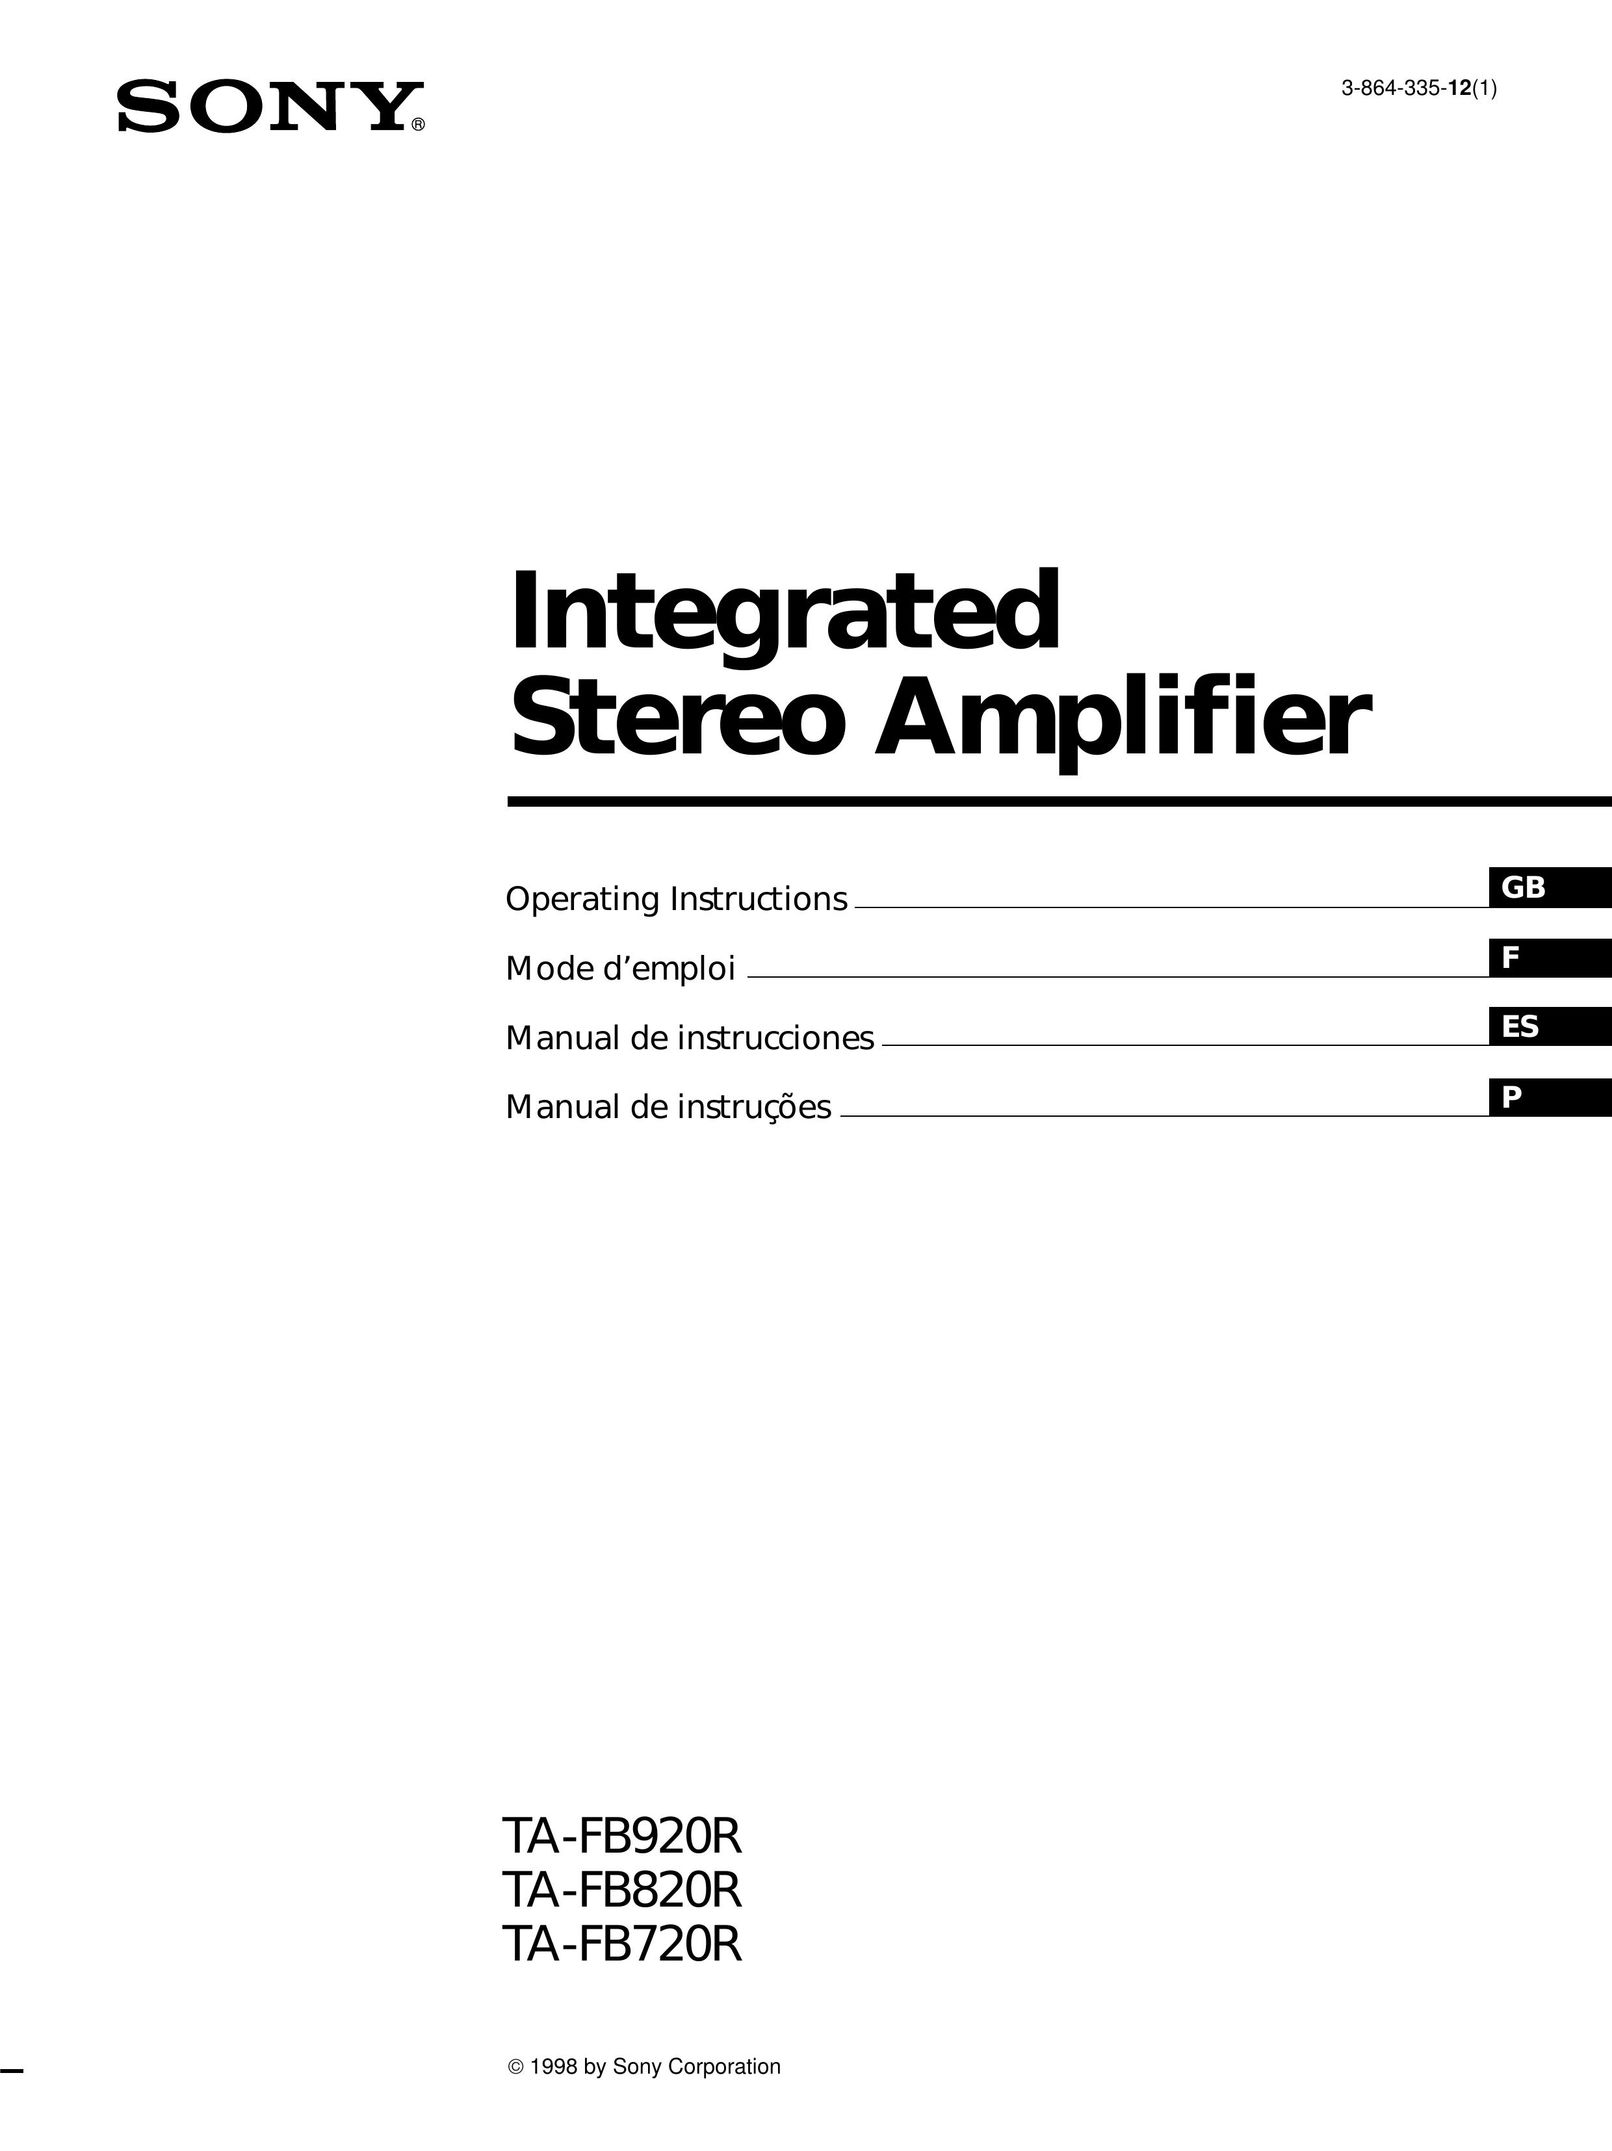 Sony TA-FB920R Stereo Amplifier User Manual